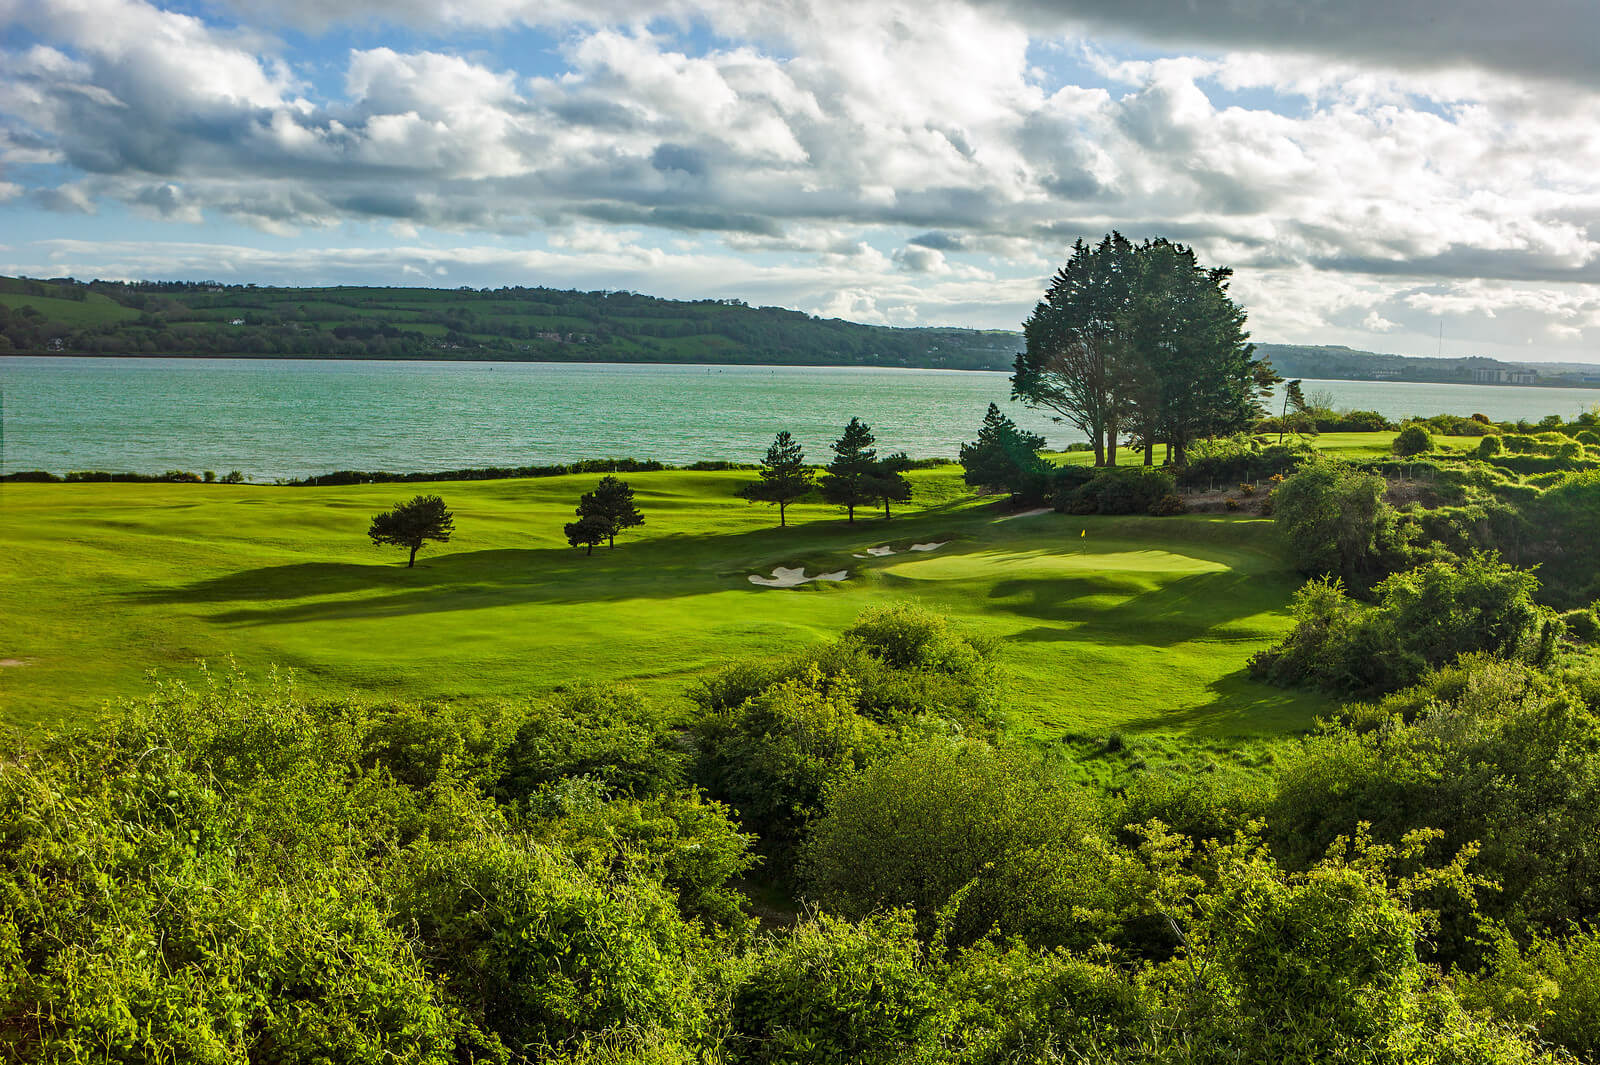 Irish seaside golf course in the southwest region